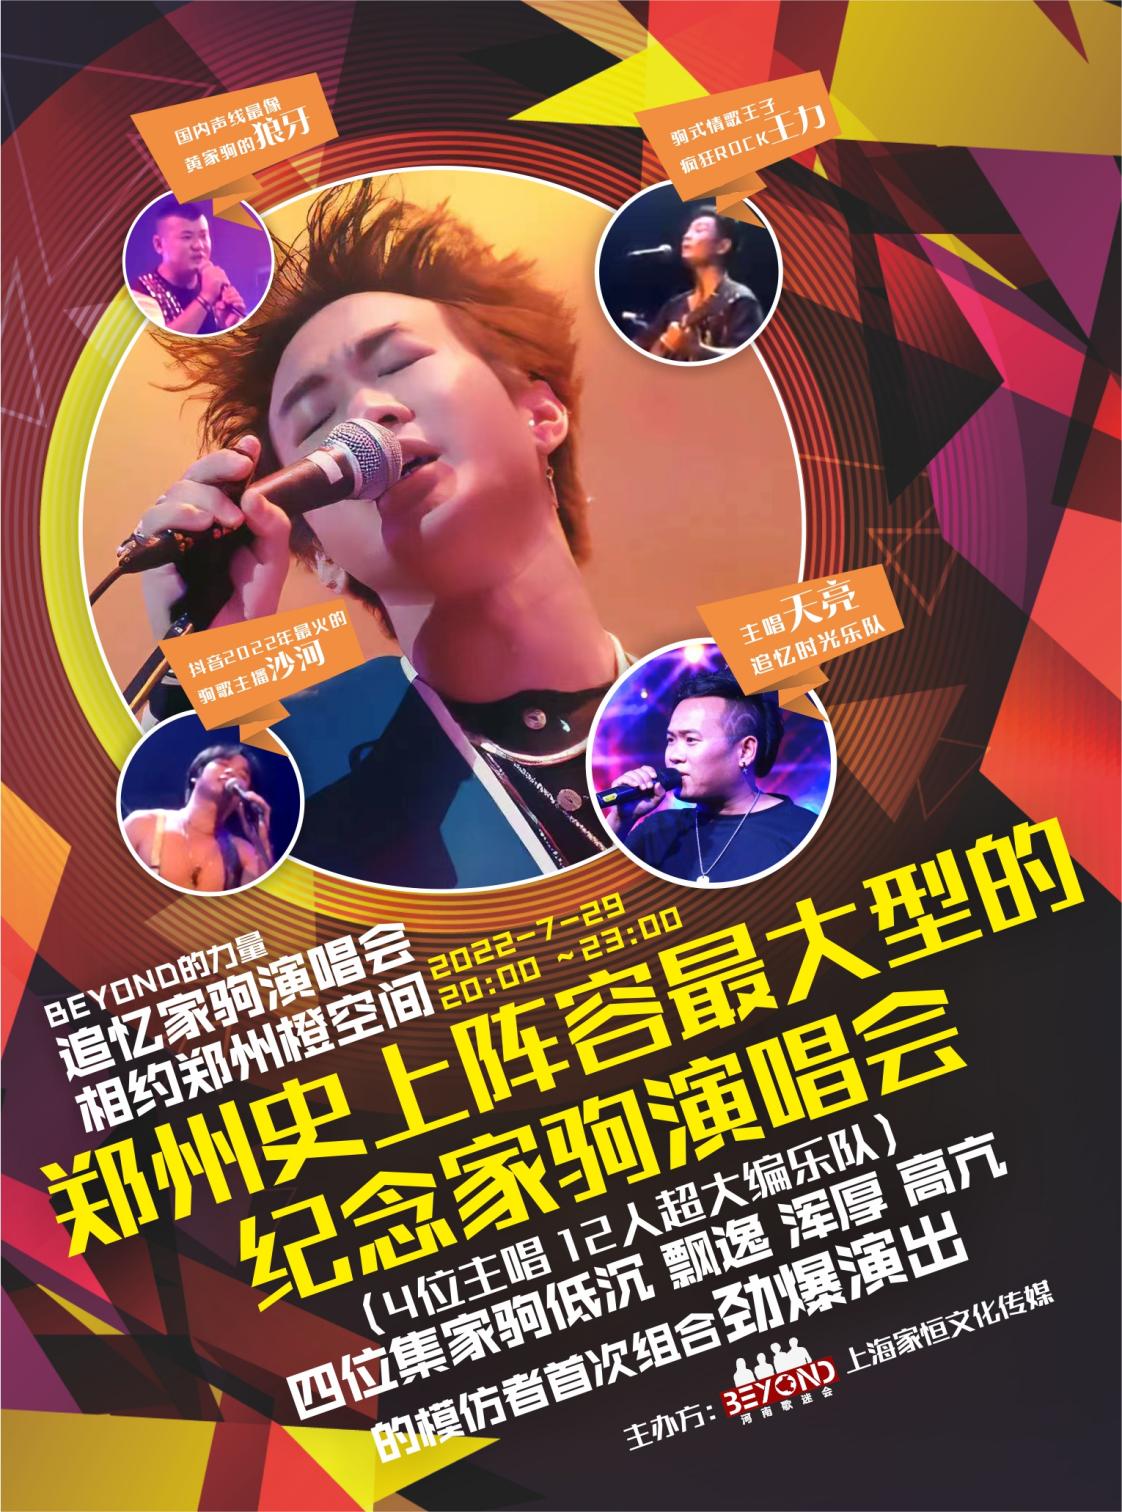 BEYOND河南歌迷会纪念家驹演唱会7.29在郑州举行